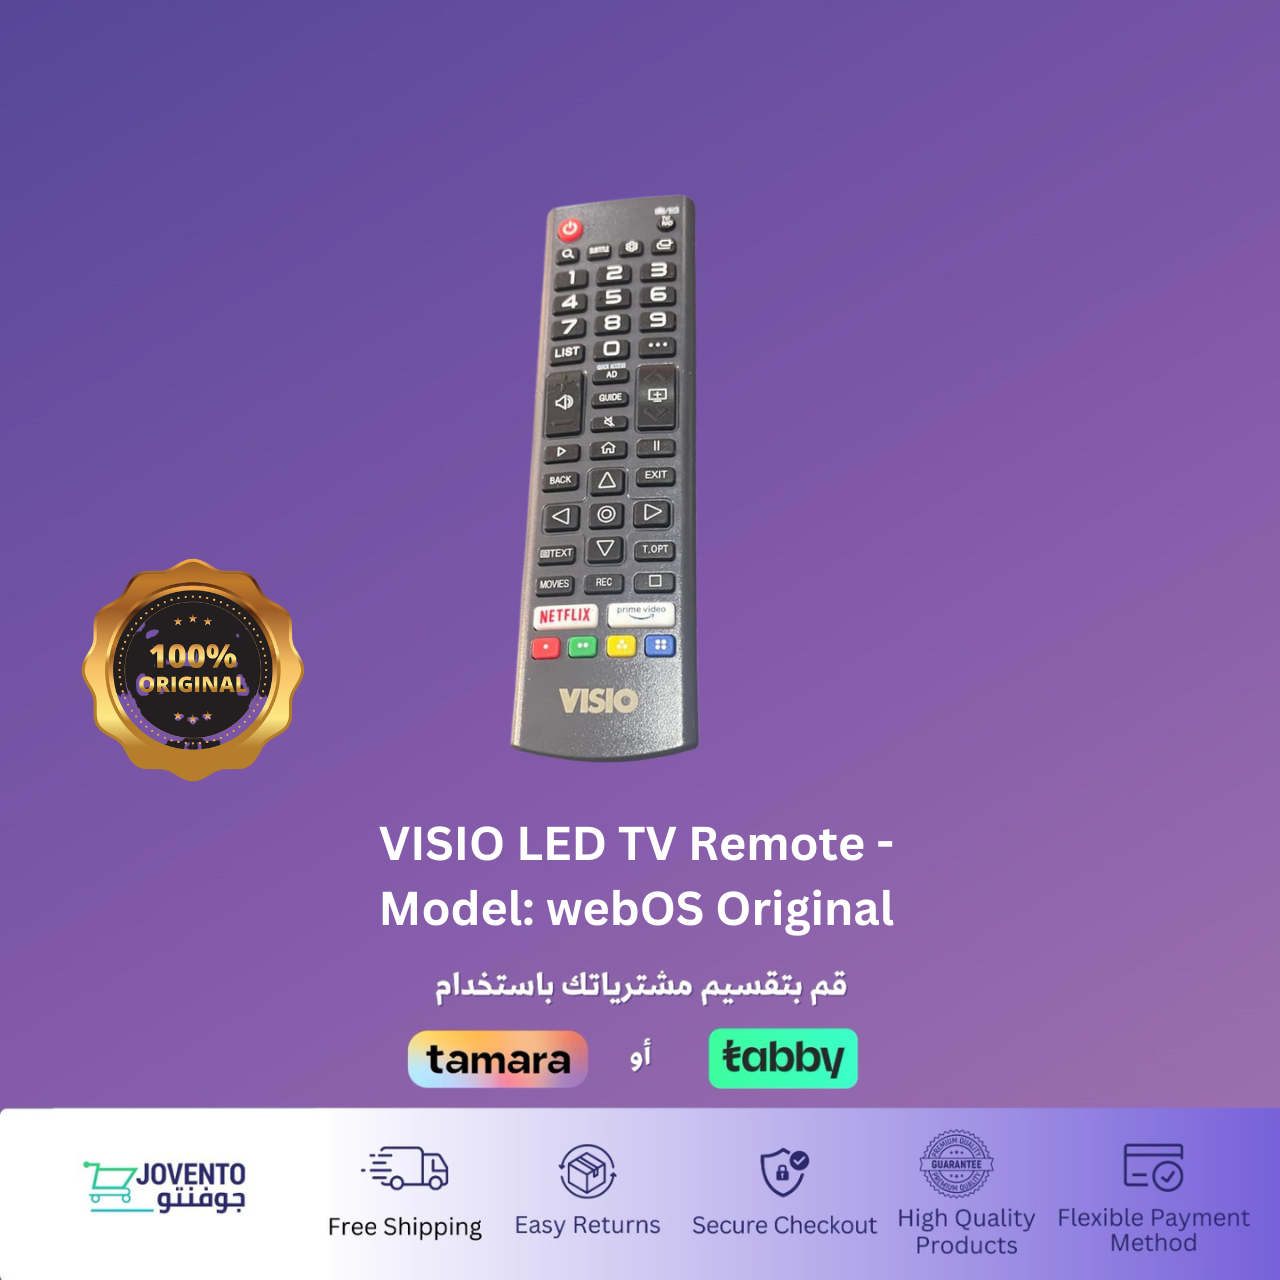 VISIO LED TV Remote - Model: webOS Original